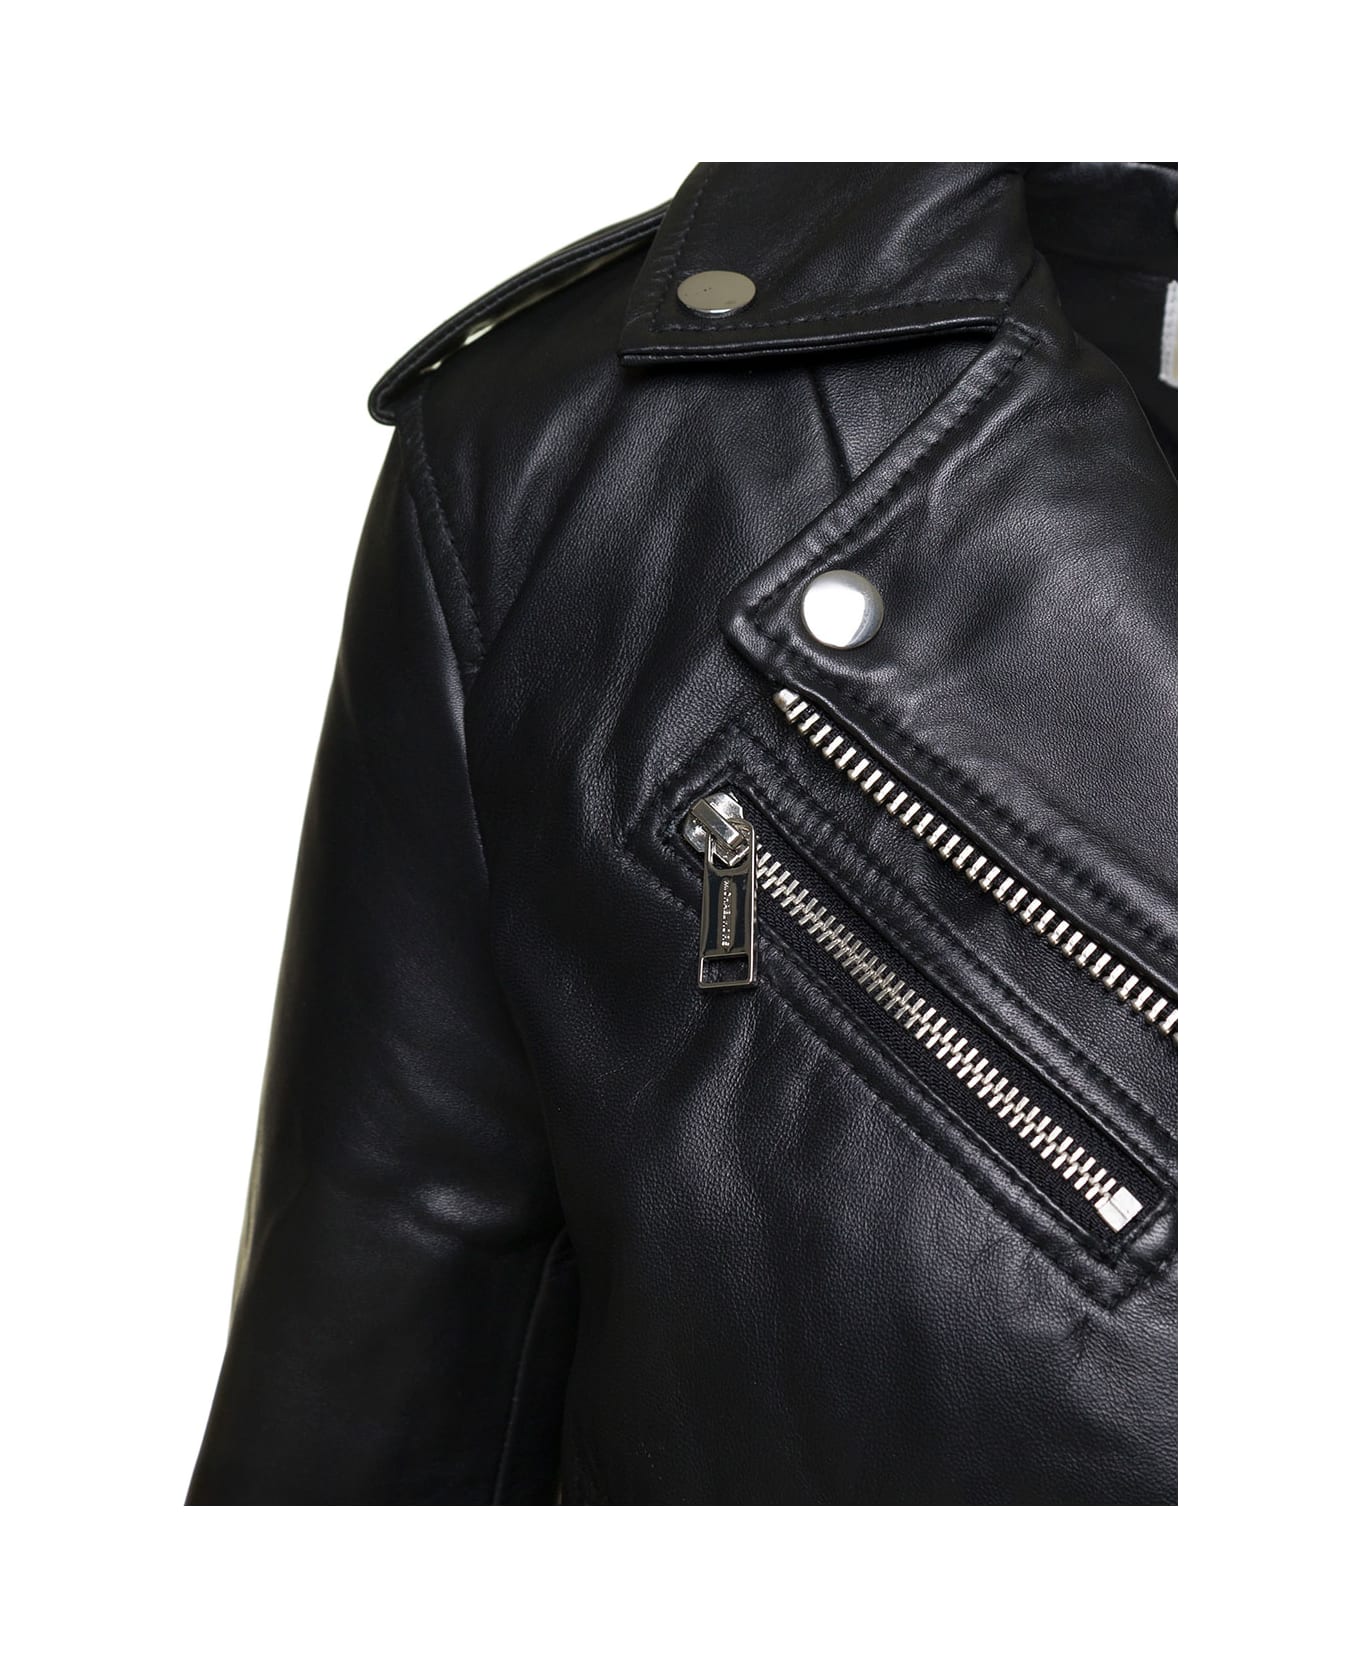 MICHAEL Michael Kors M Michael Kors Woman's Black Leather Biker Jacket - Black